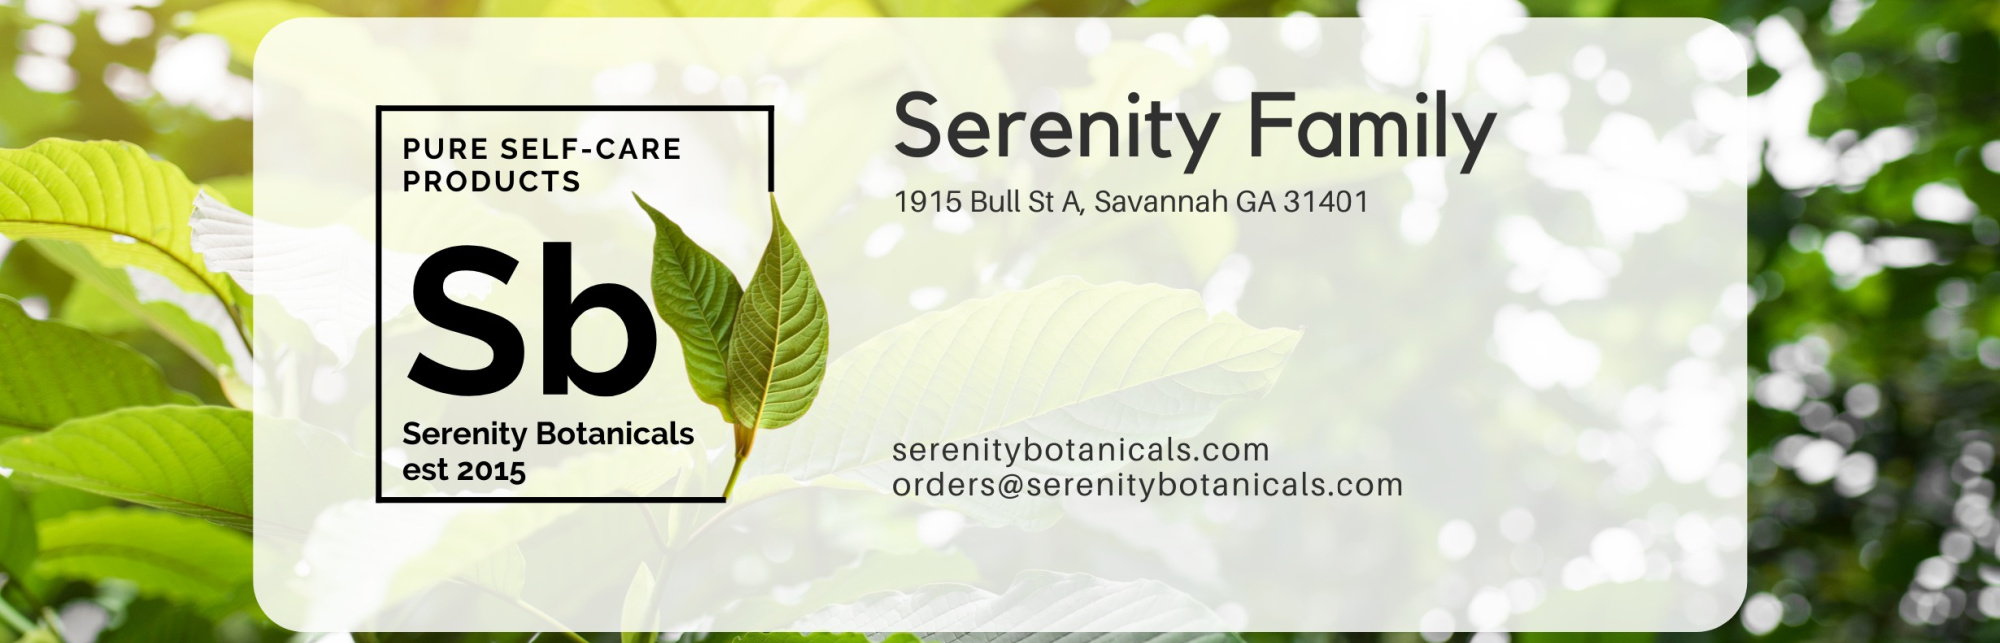 image of serenity botanicals in savannah ga